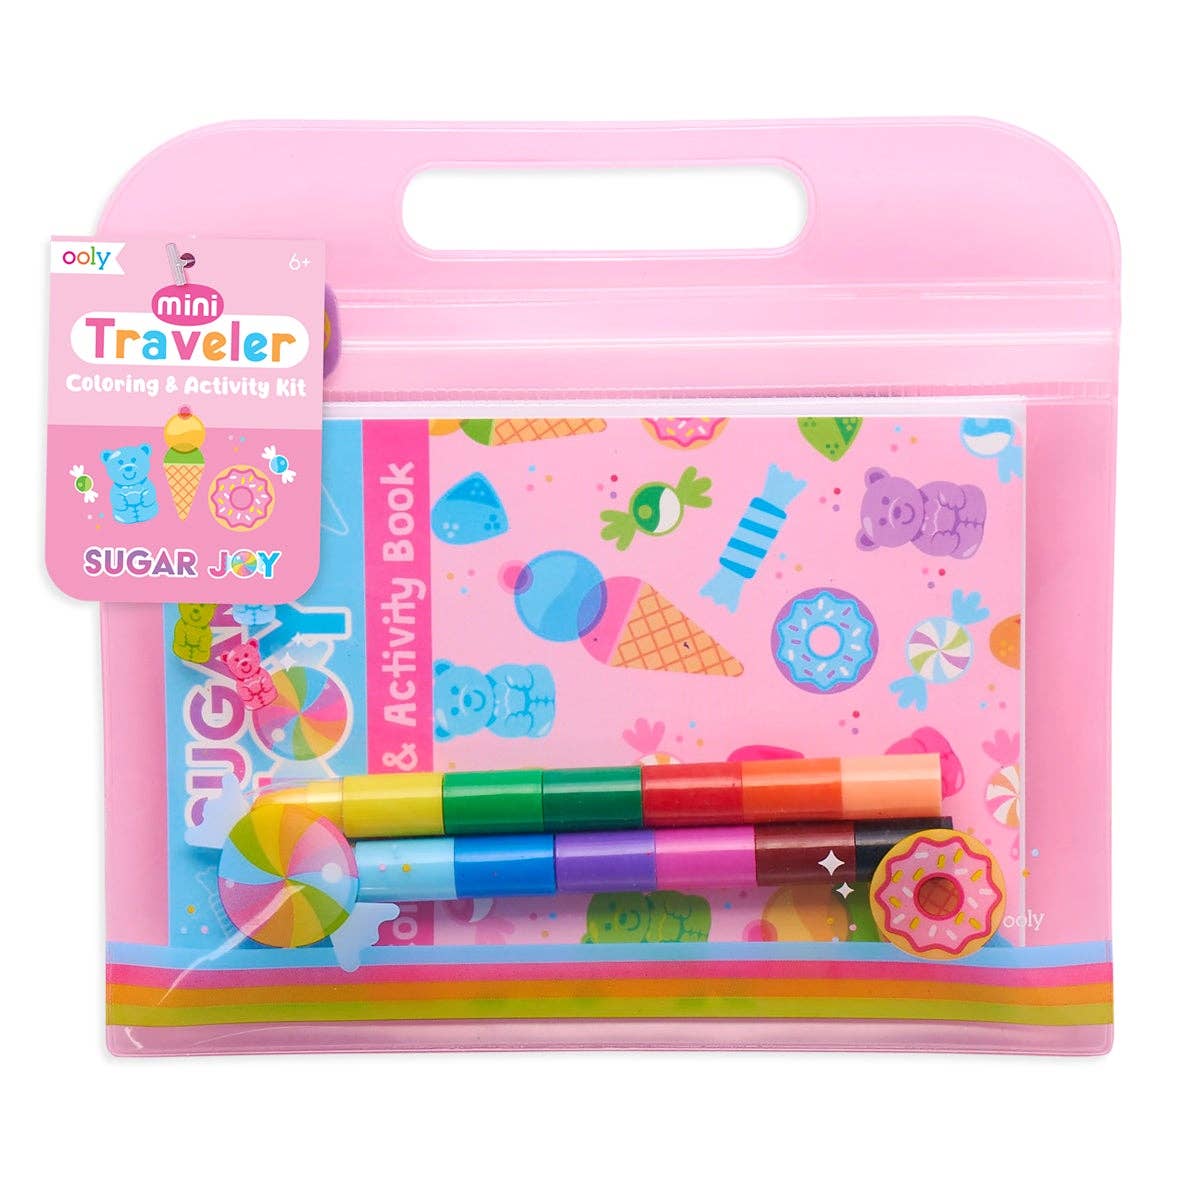 *Mini Traveler Coloring & Activity Kit - Sugar Joy